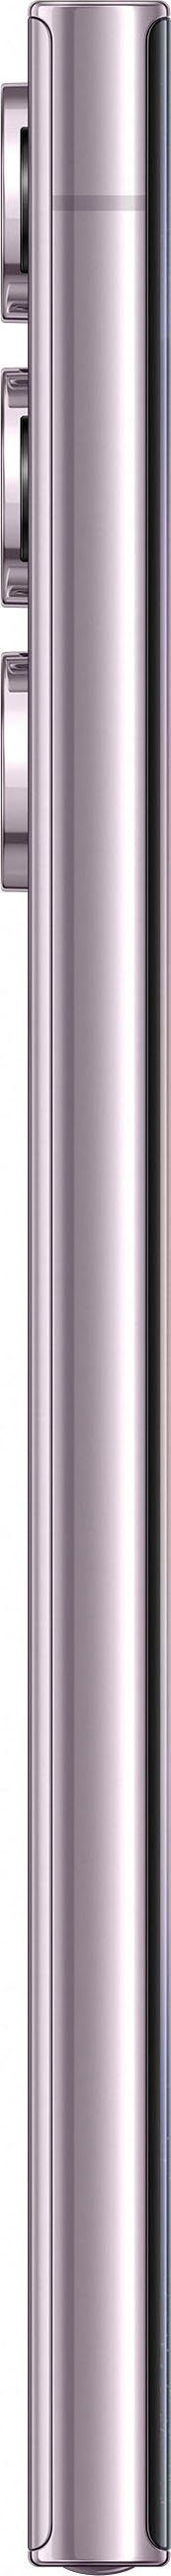 S23 200 Samsung 512 Zoll, Kamera) cm/6,8 Speicherplatz, Galaxy Smartphone GB Light MP Ultra (17,31 Pink